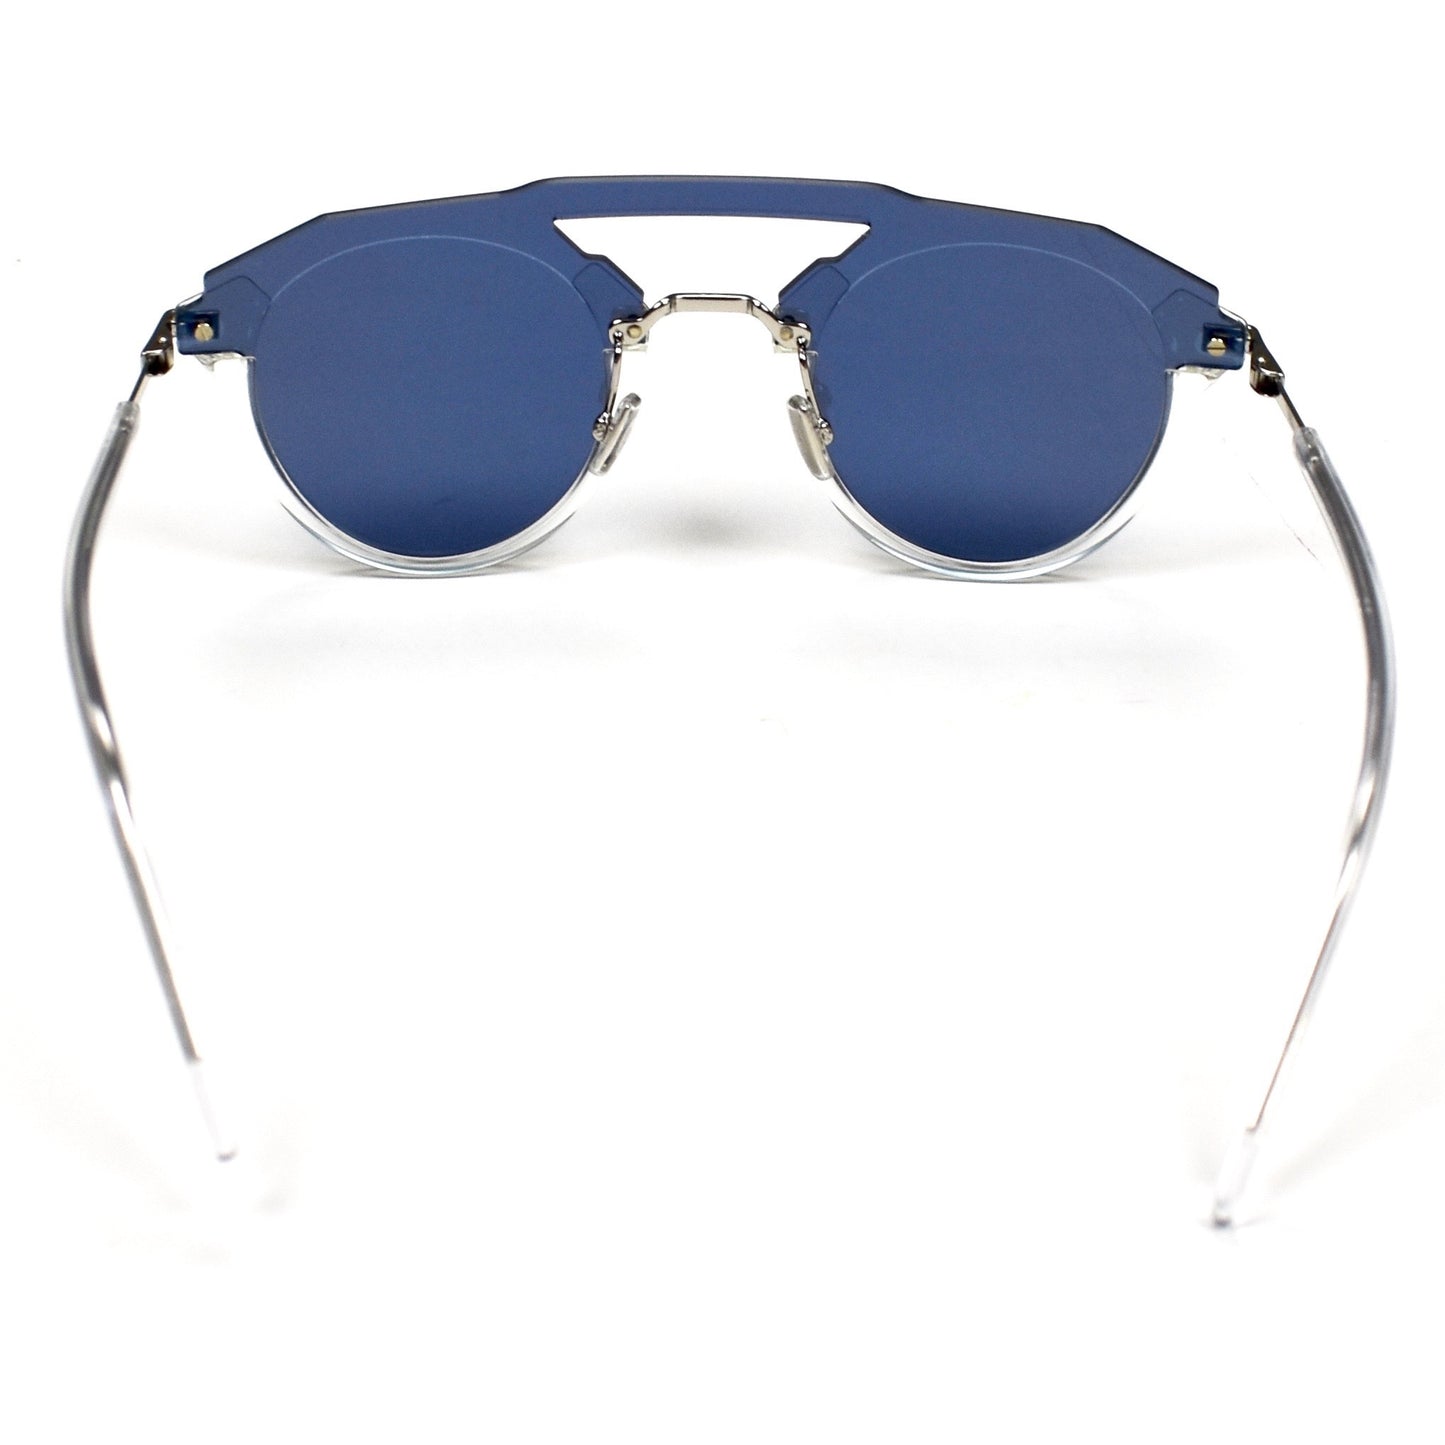 Dior - Clear Futuristic Sunglasses (Blue Lens)